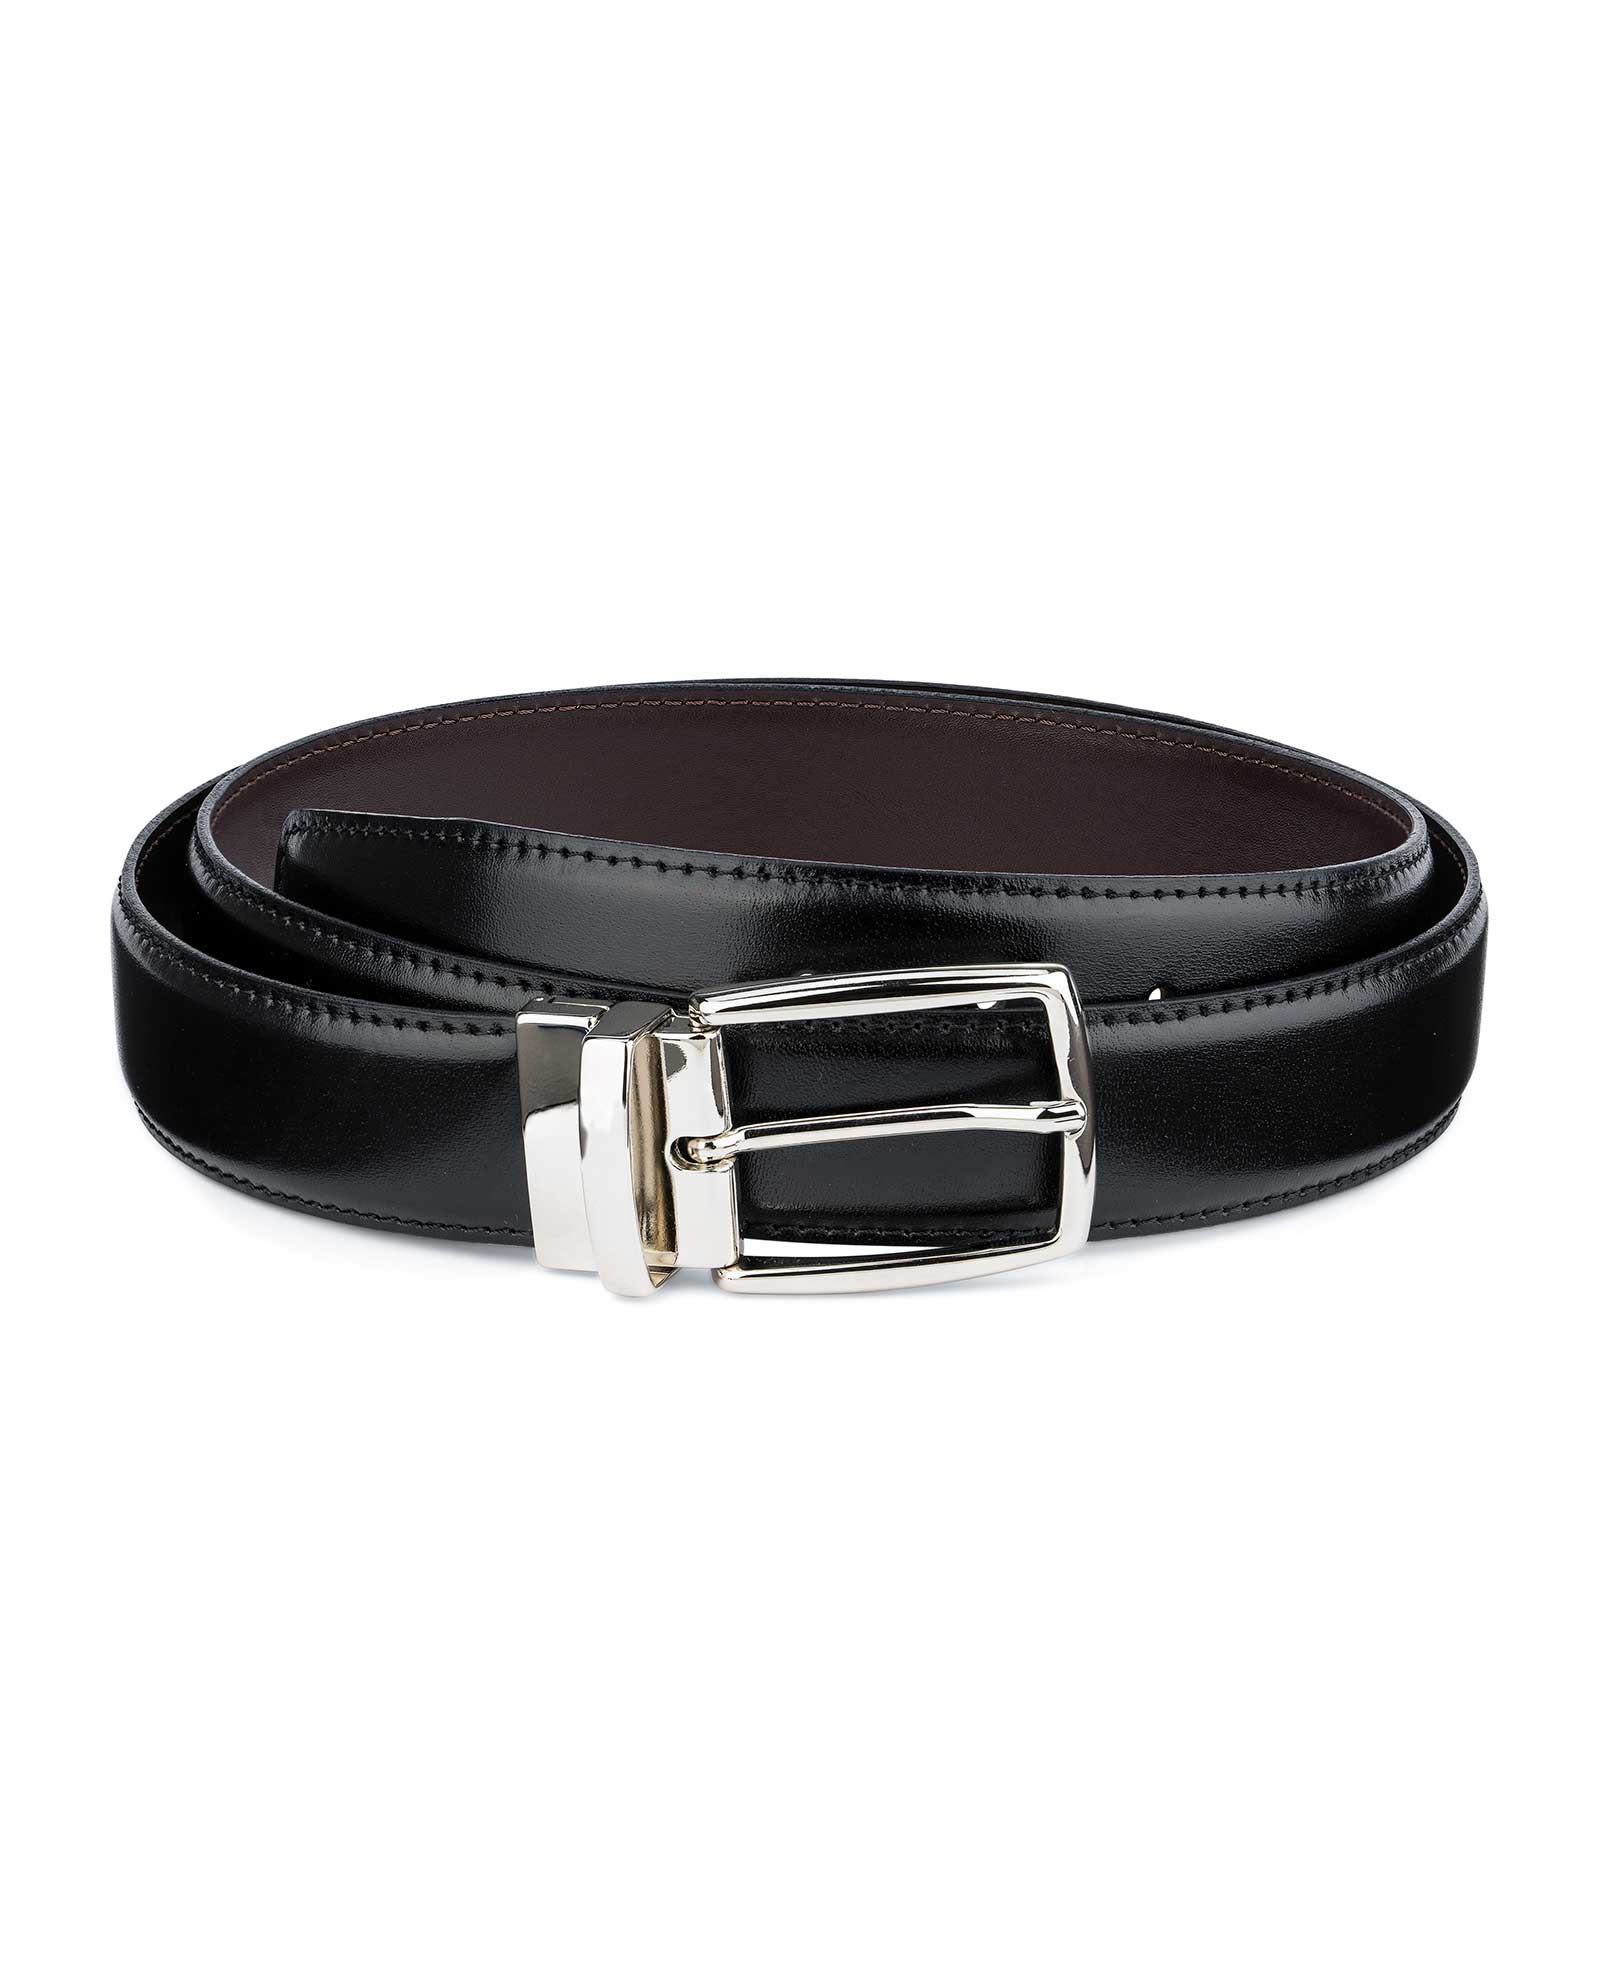 Buy Twist Reversible Leather Belt | Black Brown | LeatherBeltsOnline.com